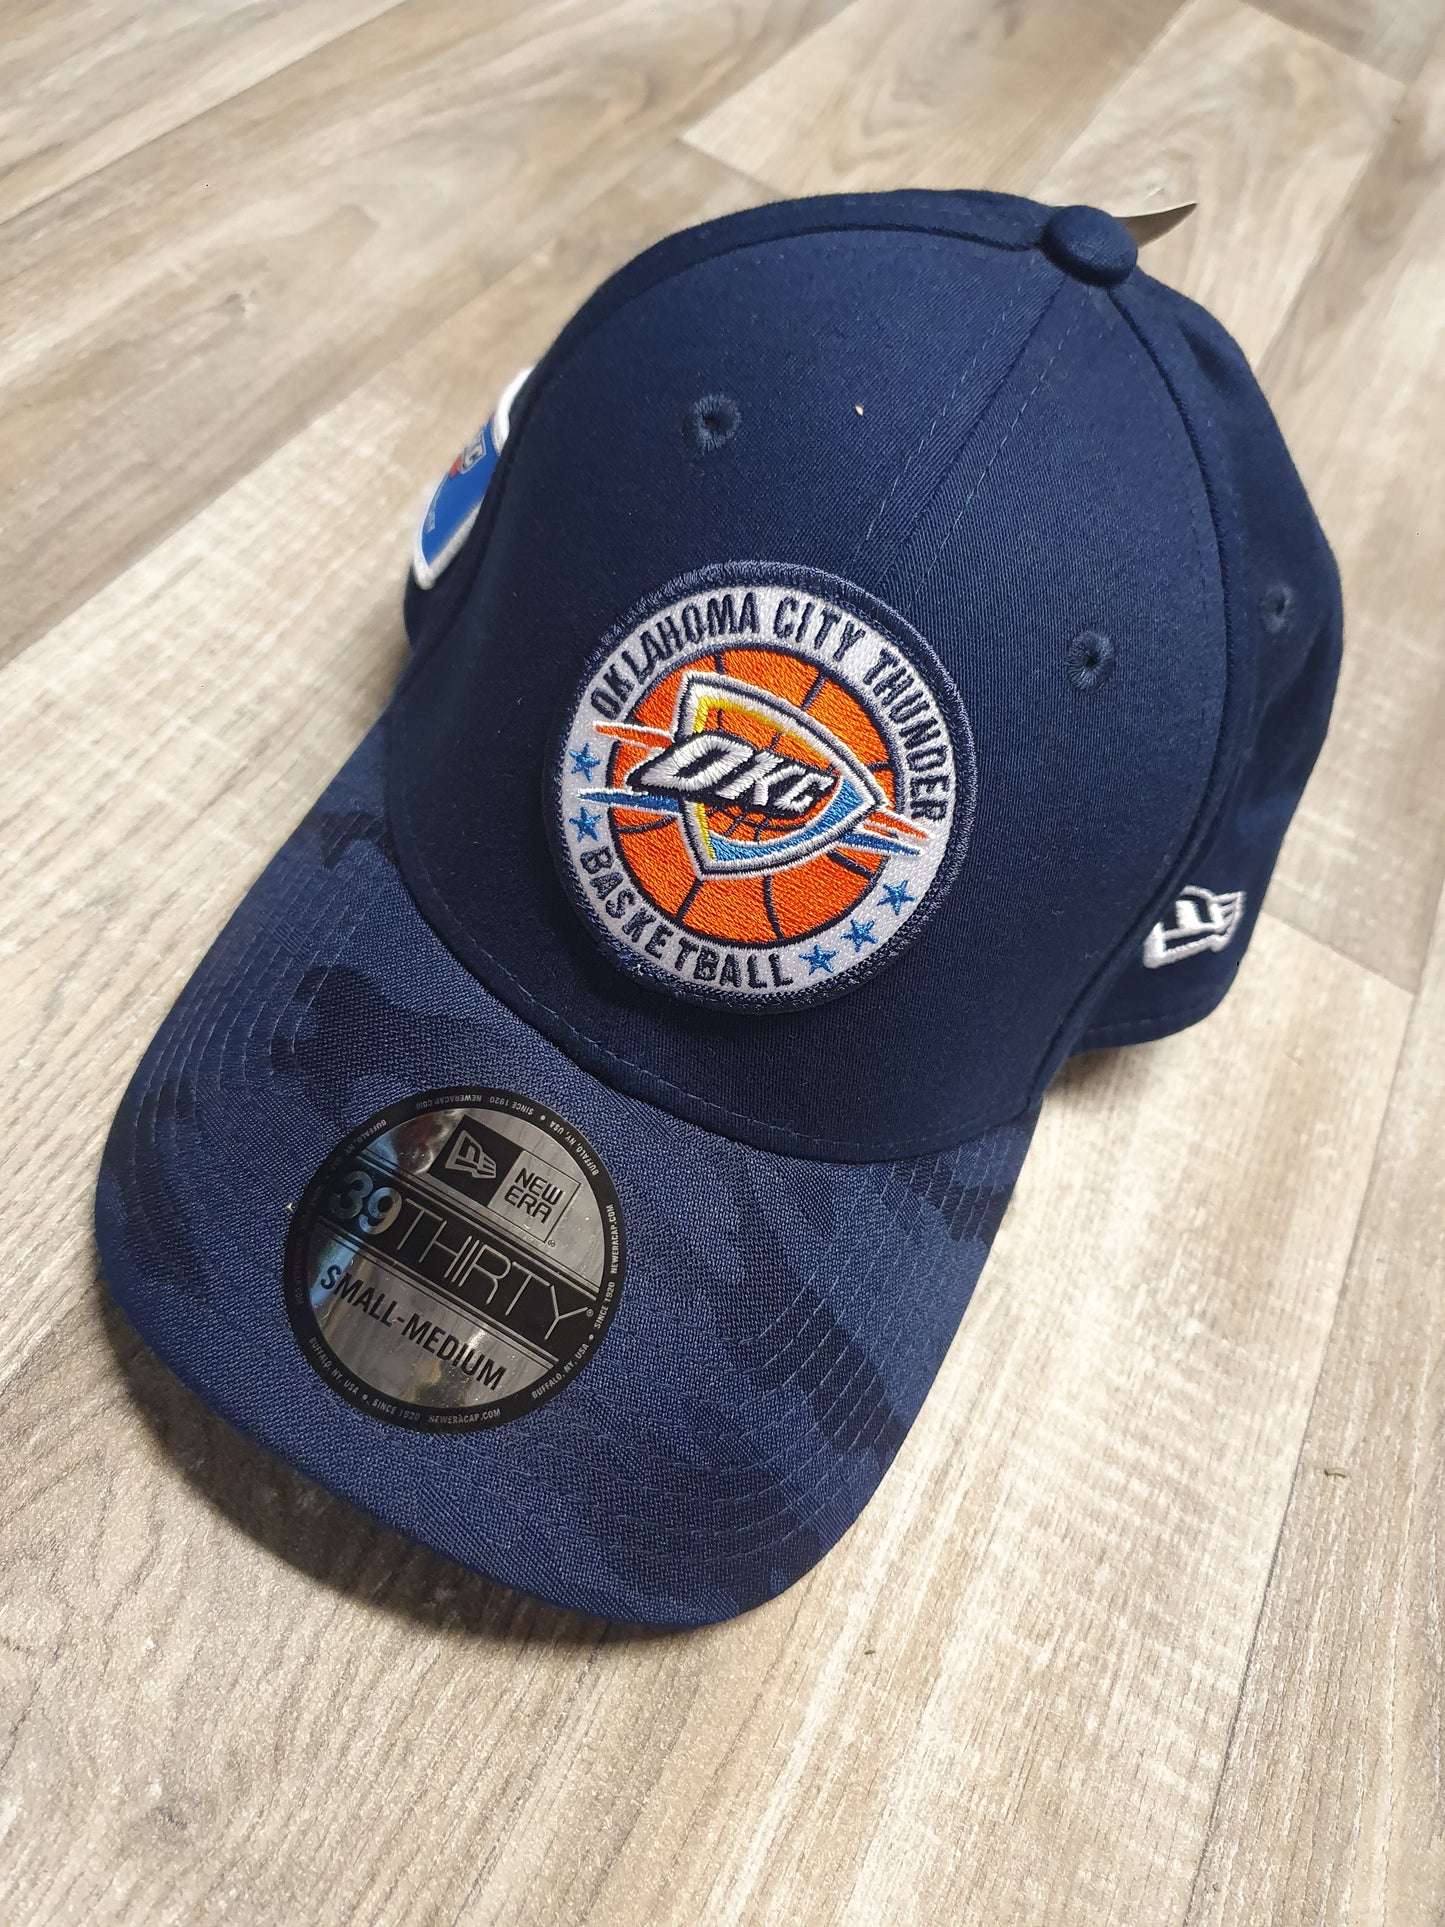 Oklahoma City Thunder Flexifit Hat